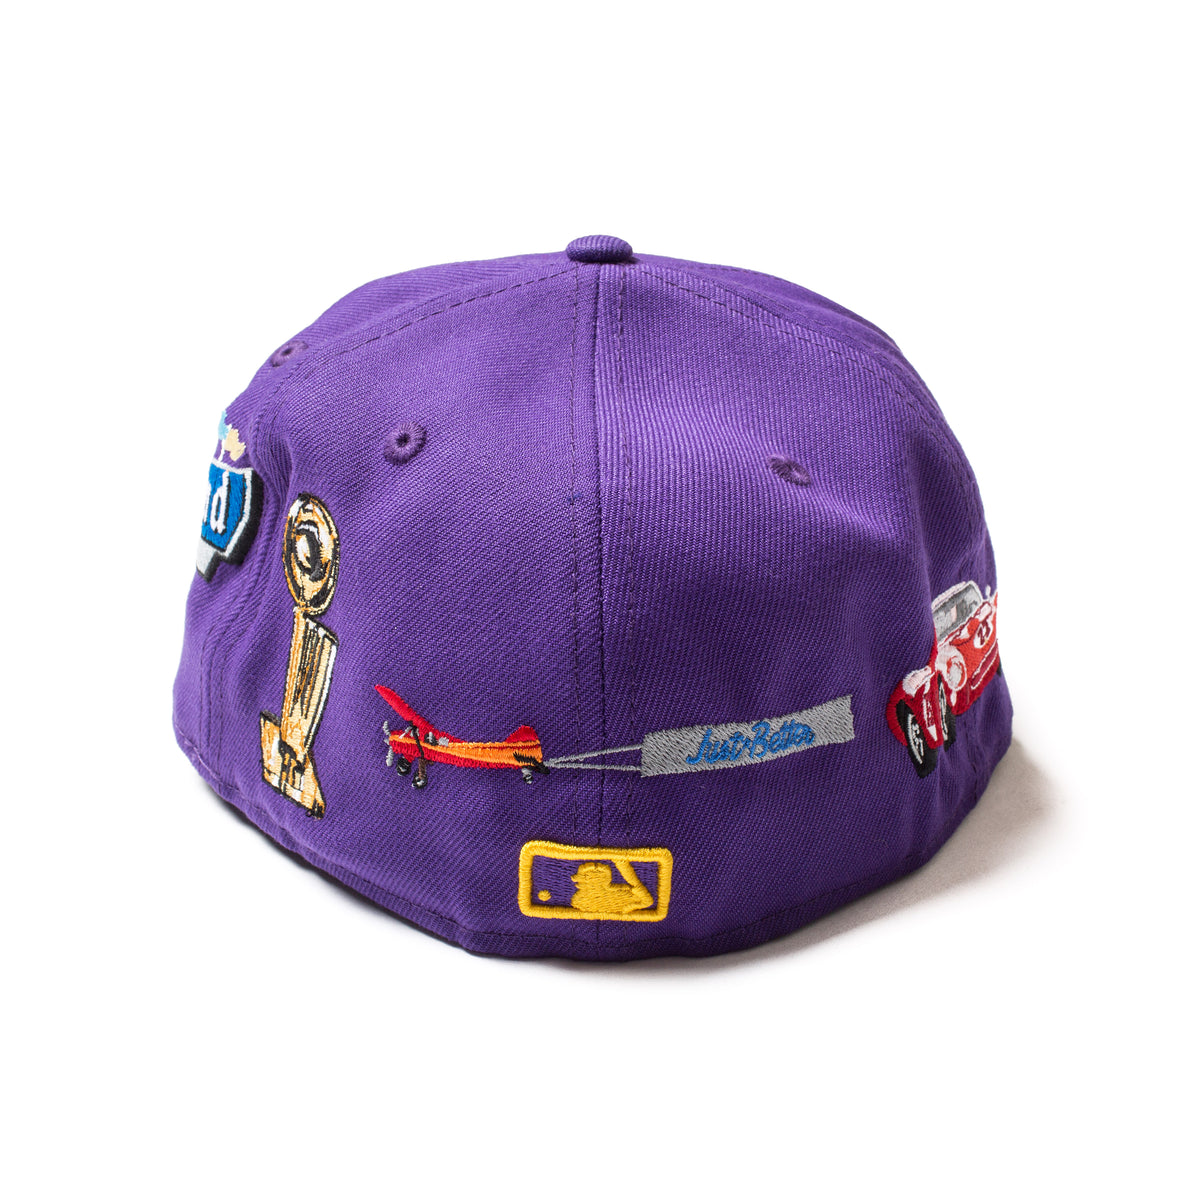 Just Better™ Purple Dodger Hat Better™ Gift Shop